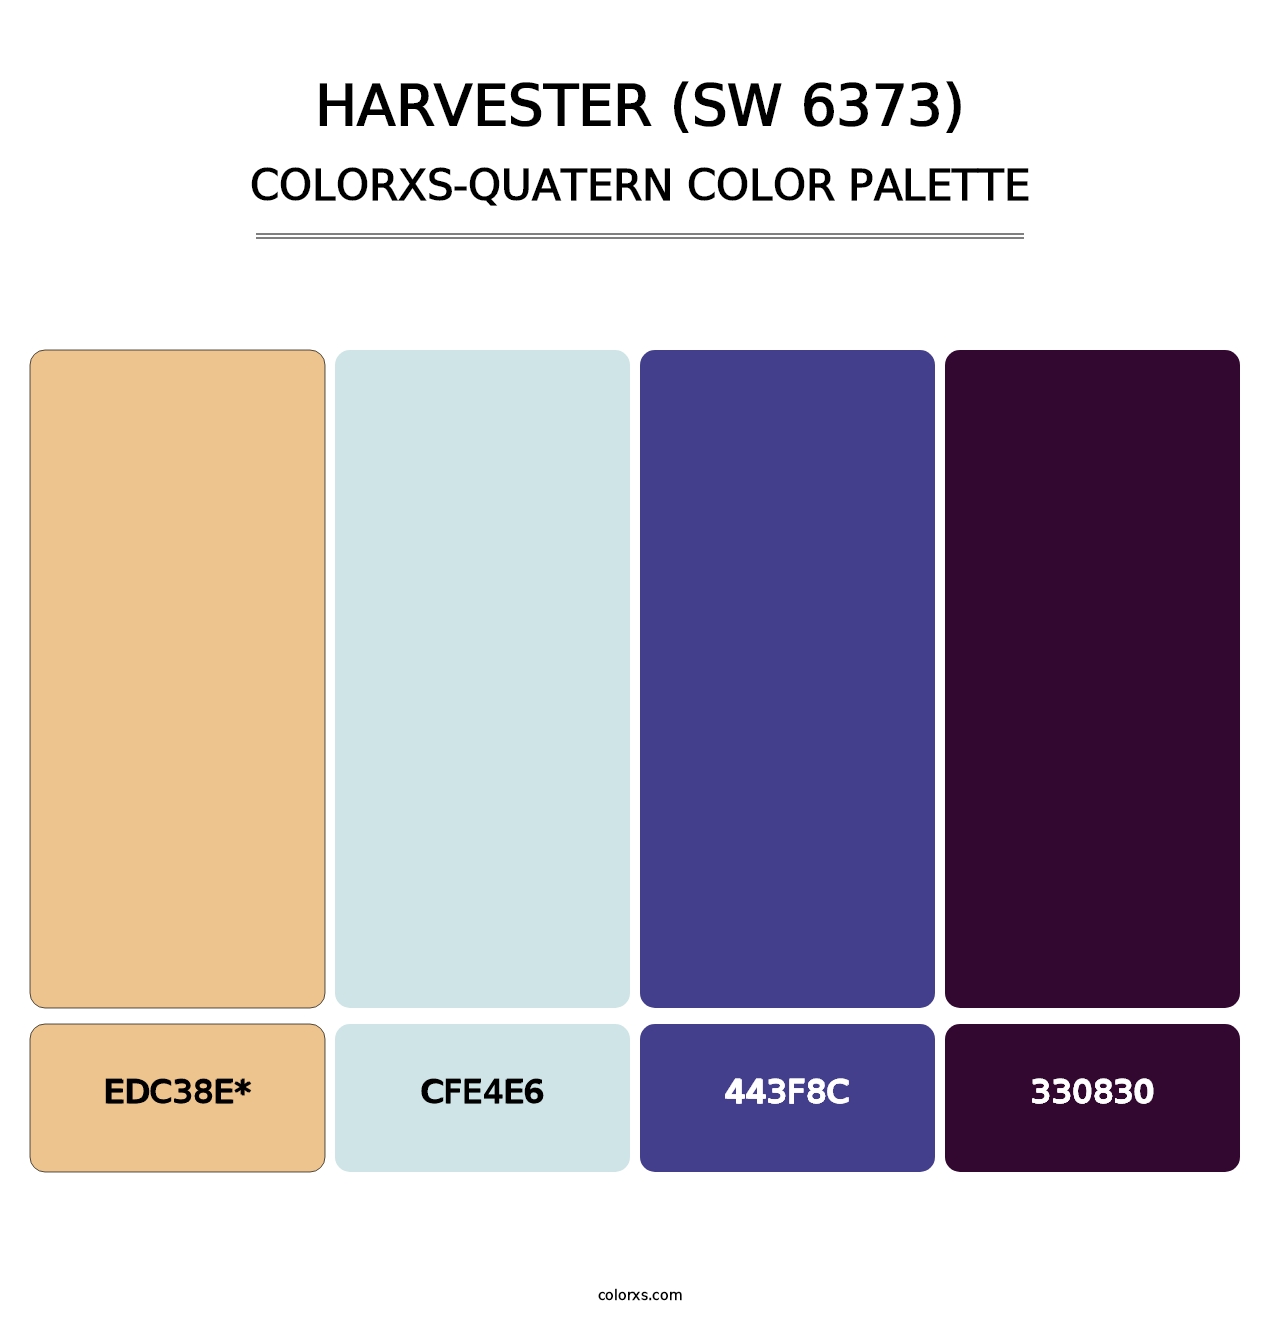 Harvester (SW 6373) - Colorxs Quatern Palette